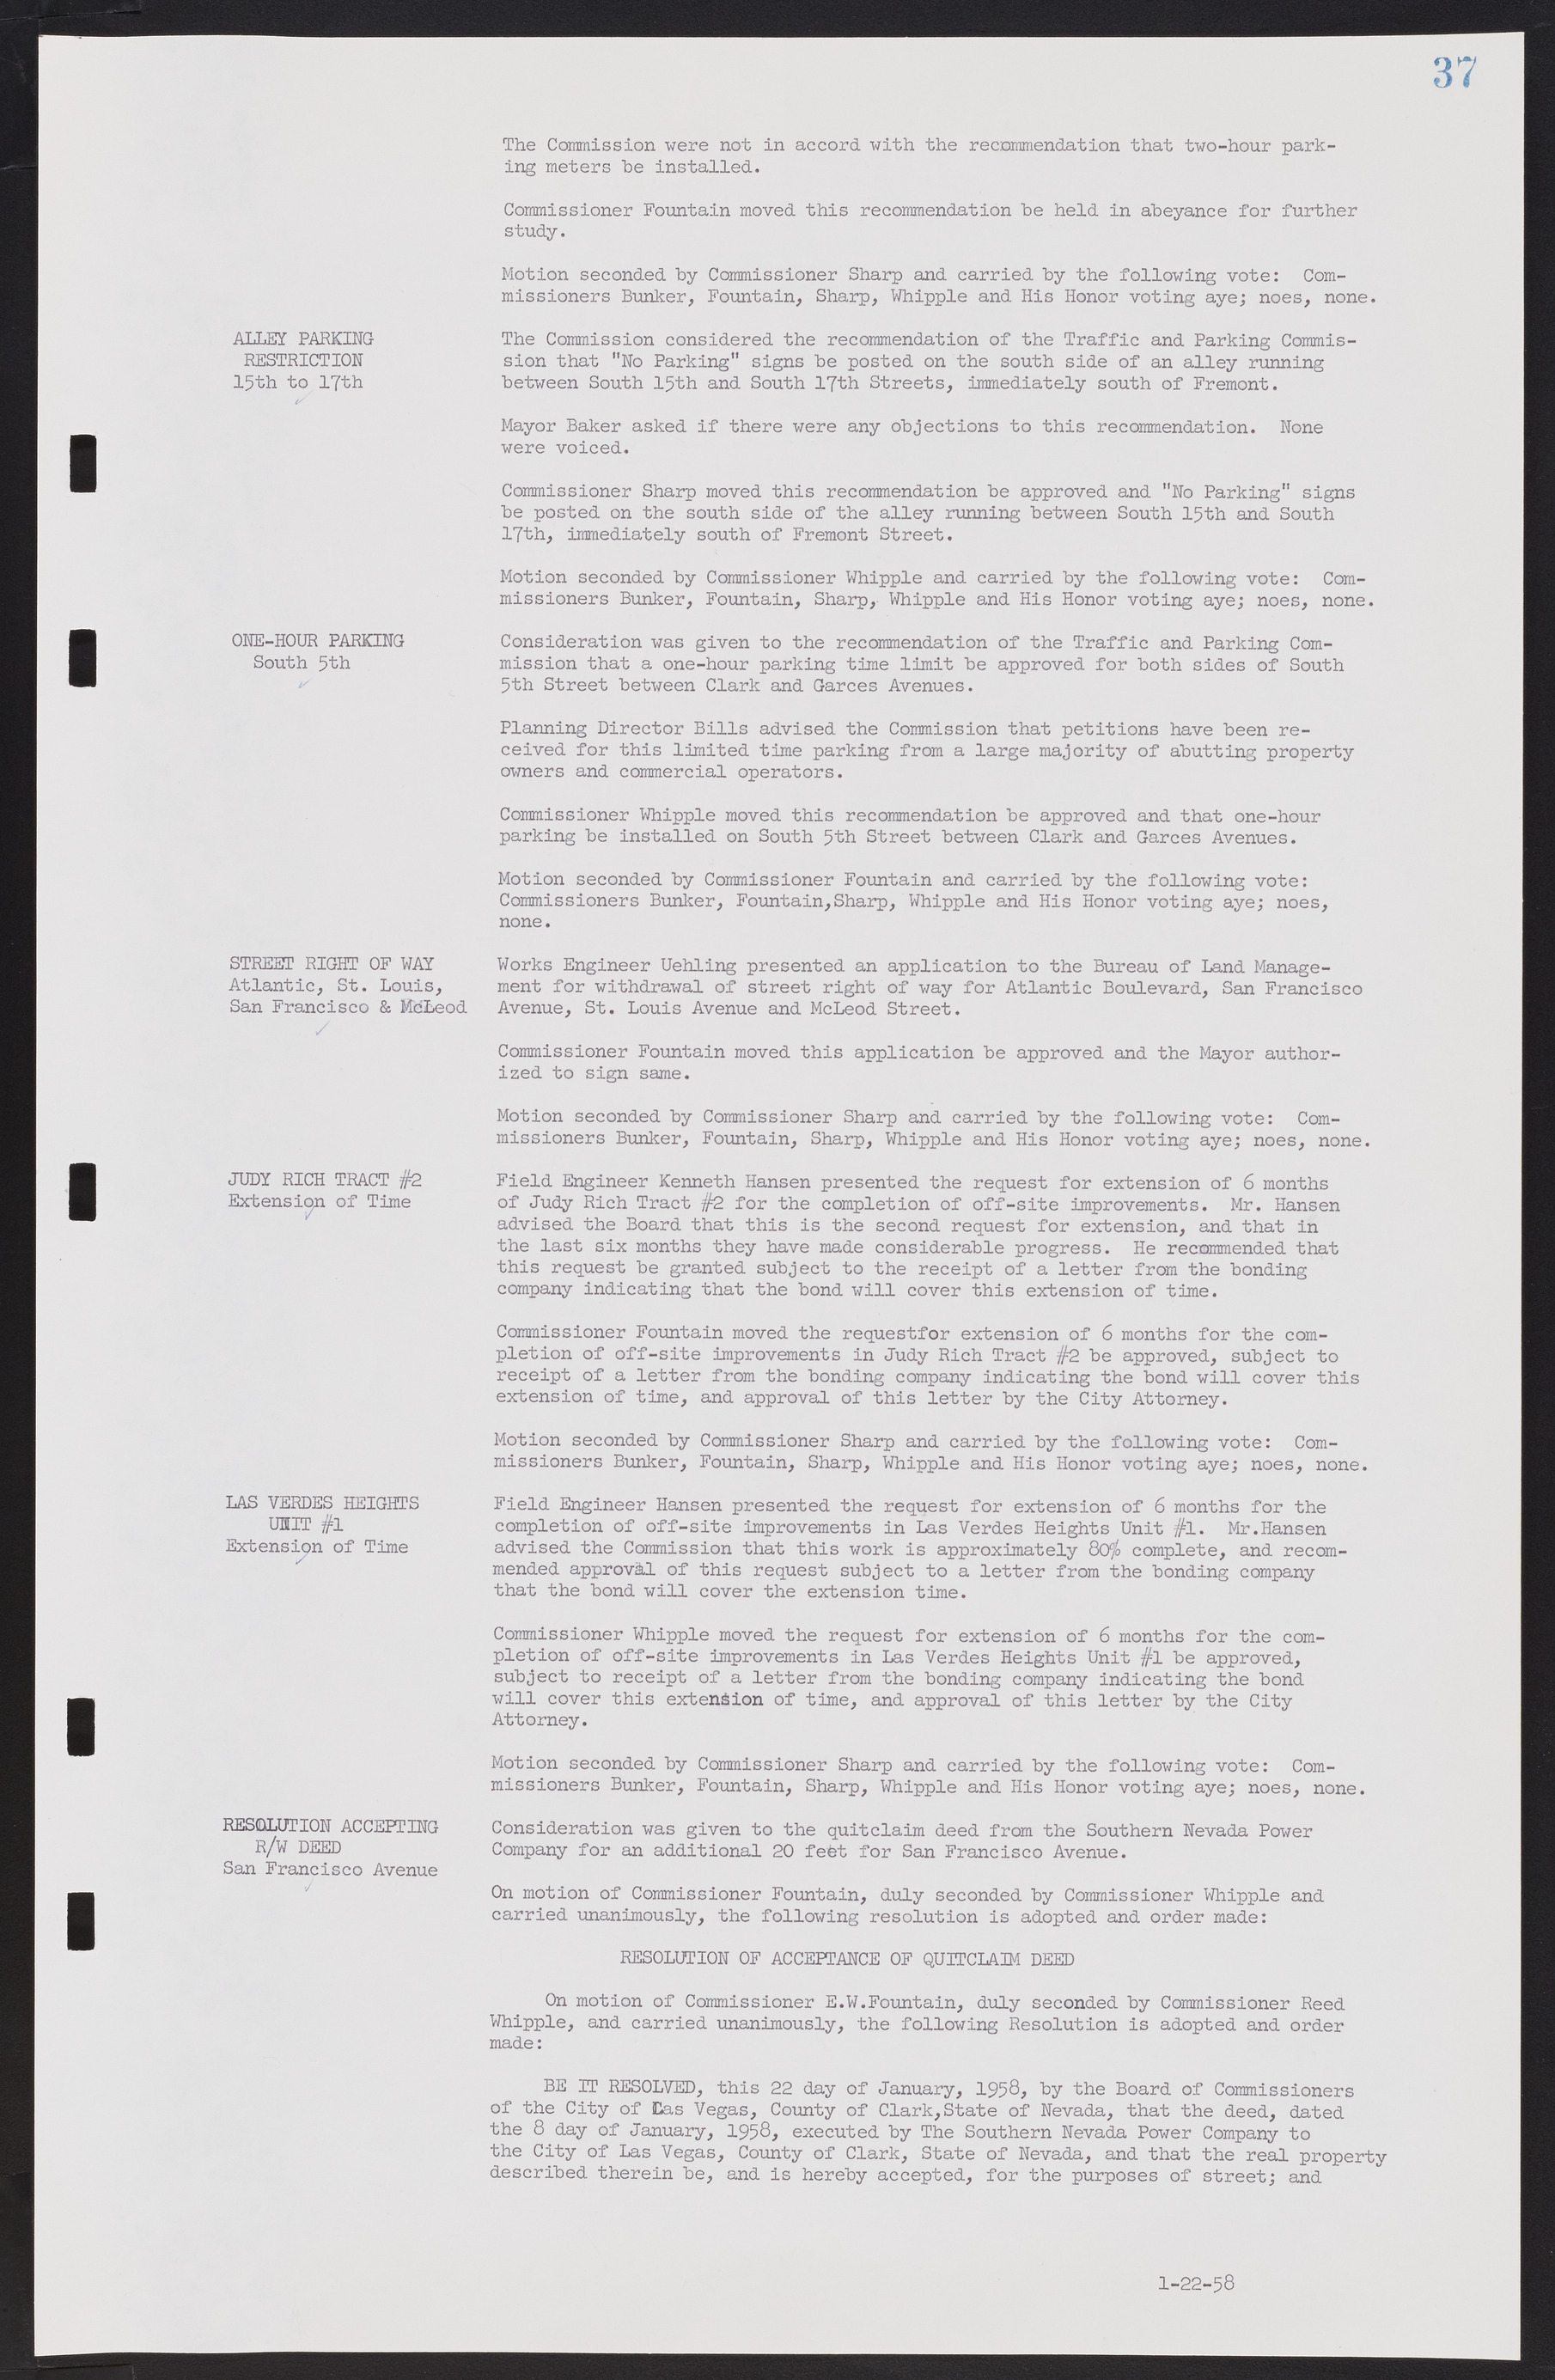 Las Vegas City Commission Minutes, November 20, 1957 to December 2, 1959, lvc000011-41